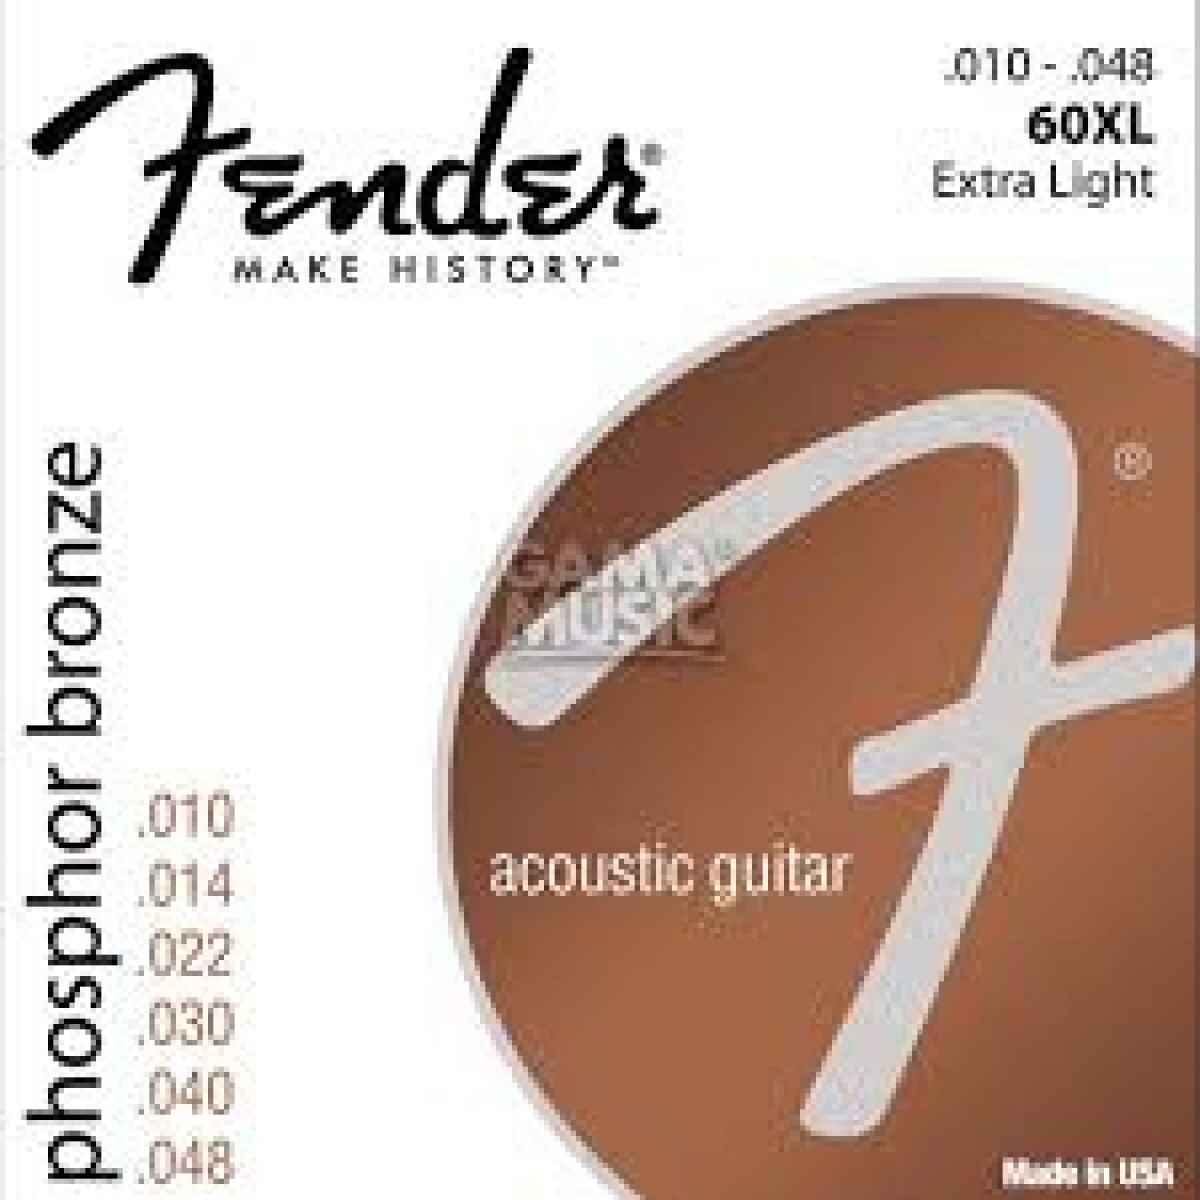 Encordado Folk Fender Phosphor Bronze 60xl 010 